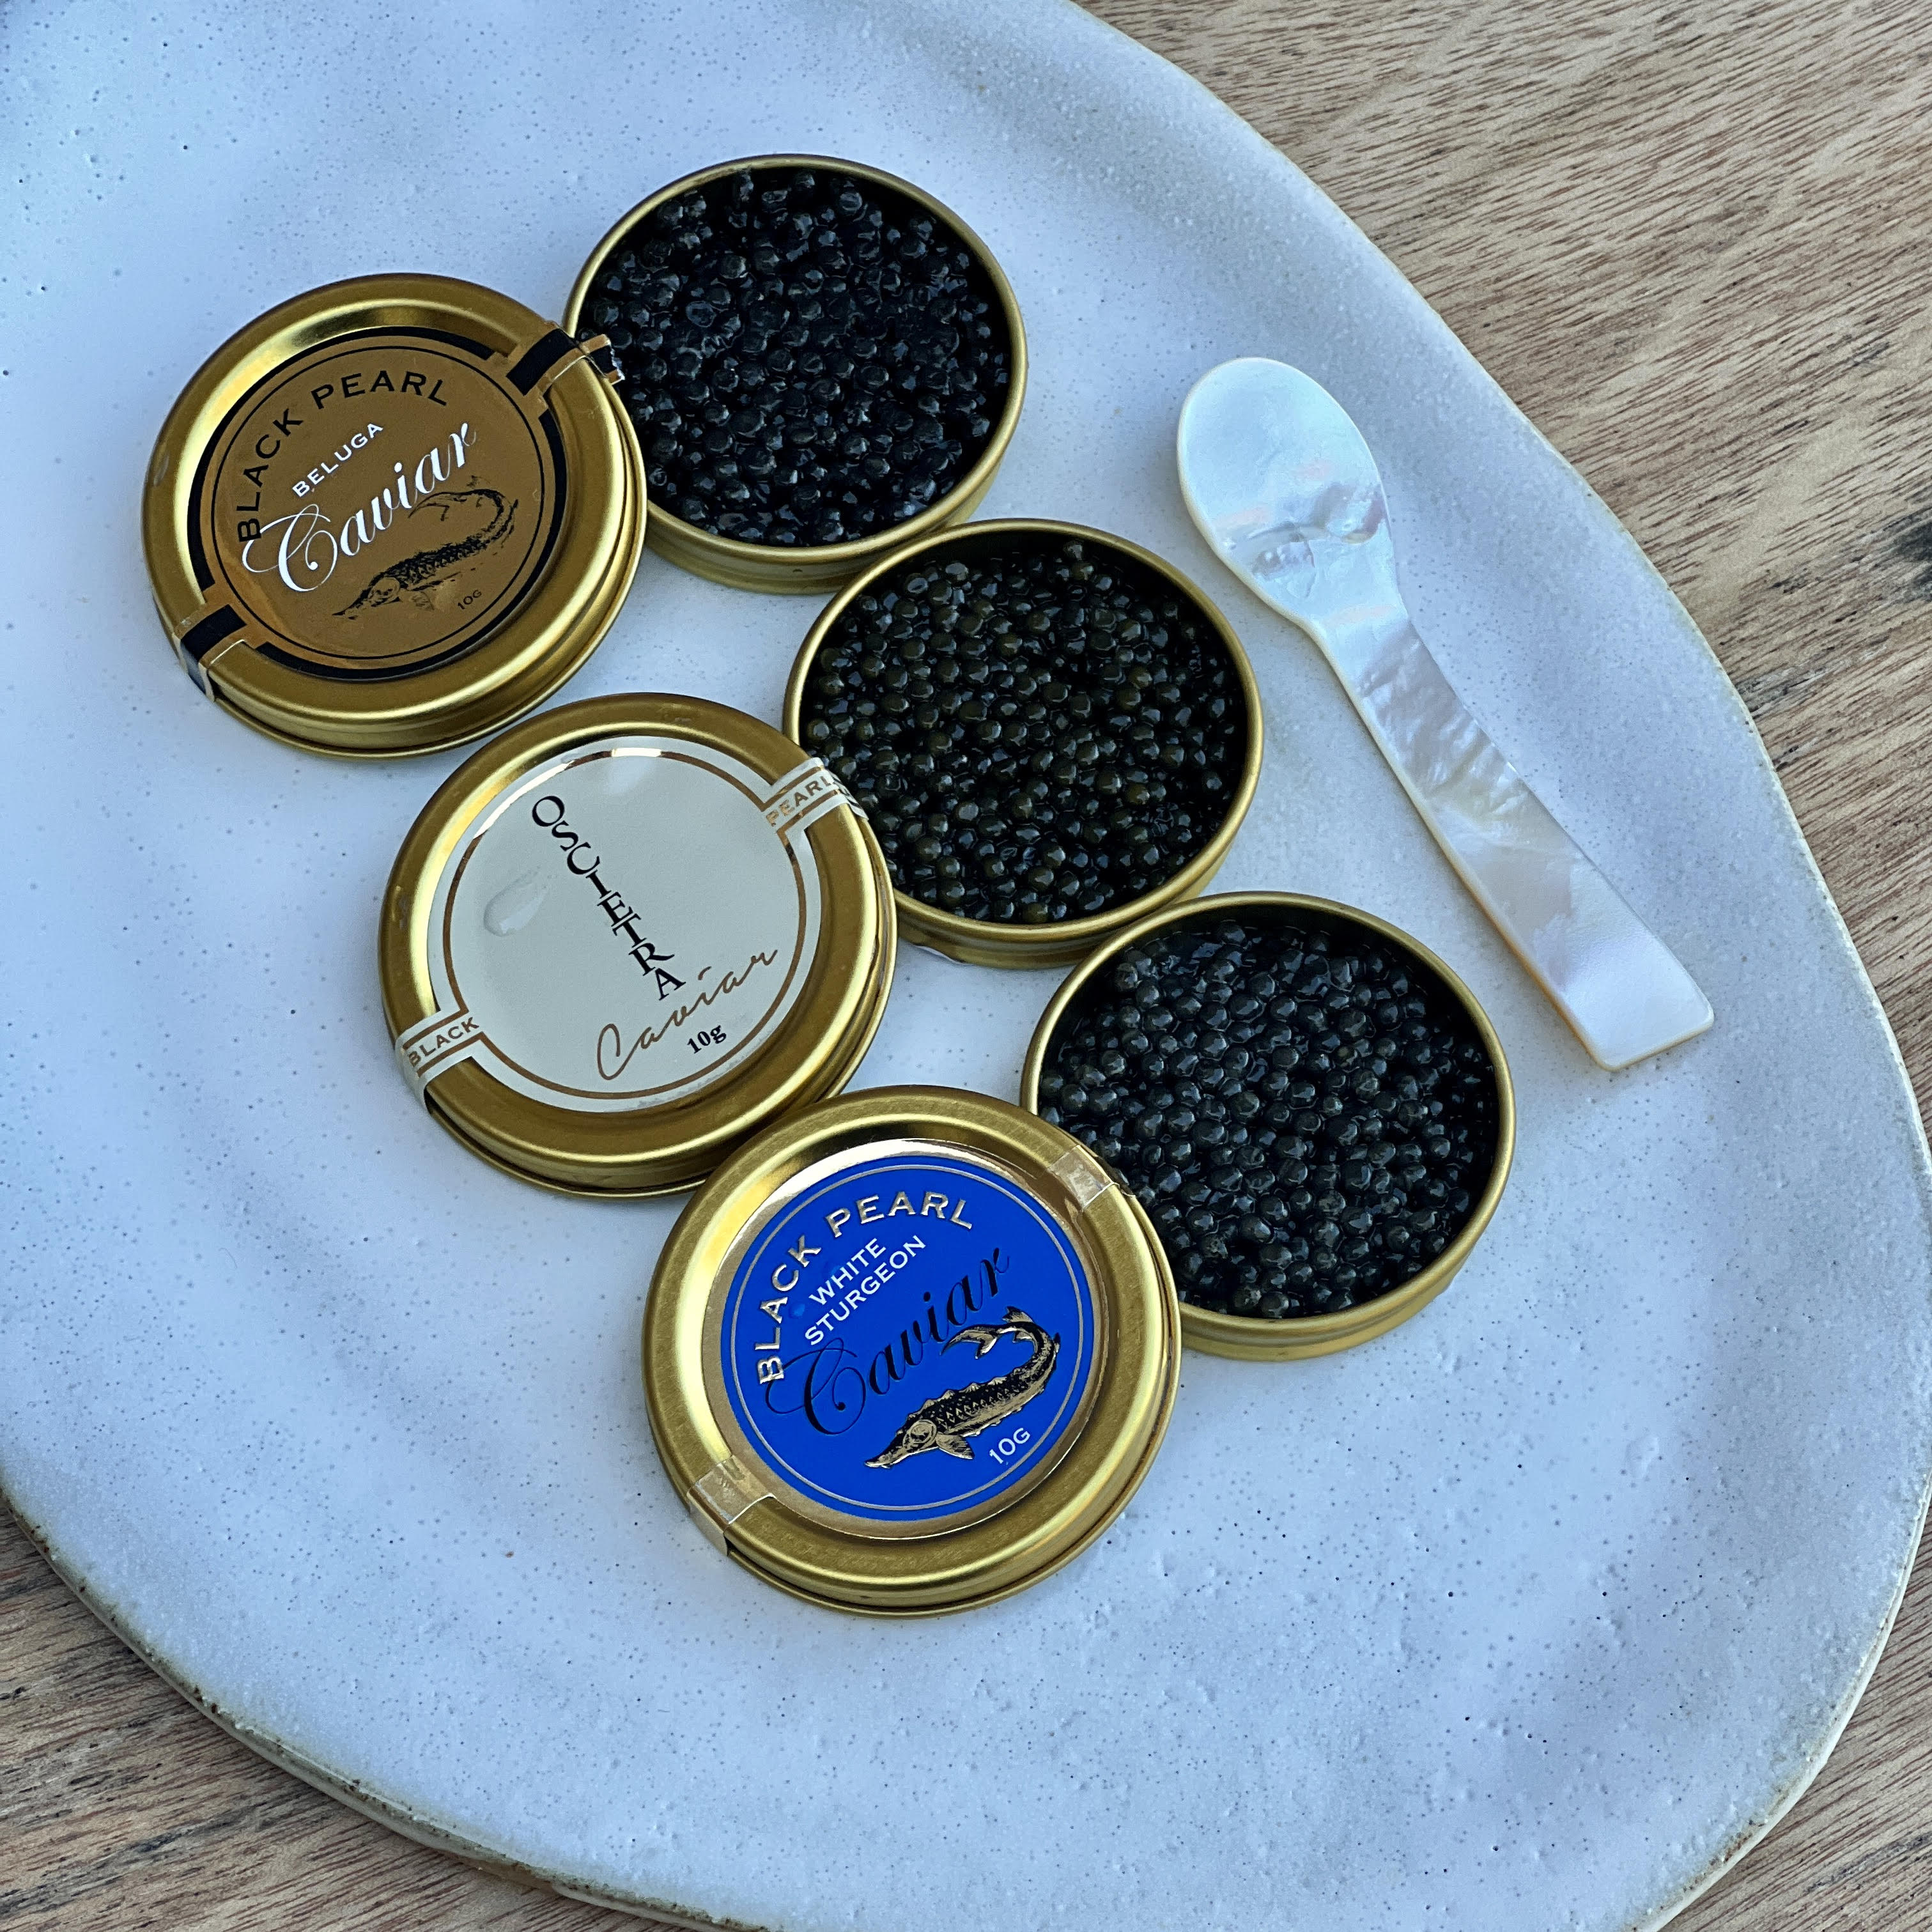 Caviar Comparative Tasting Kit